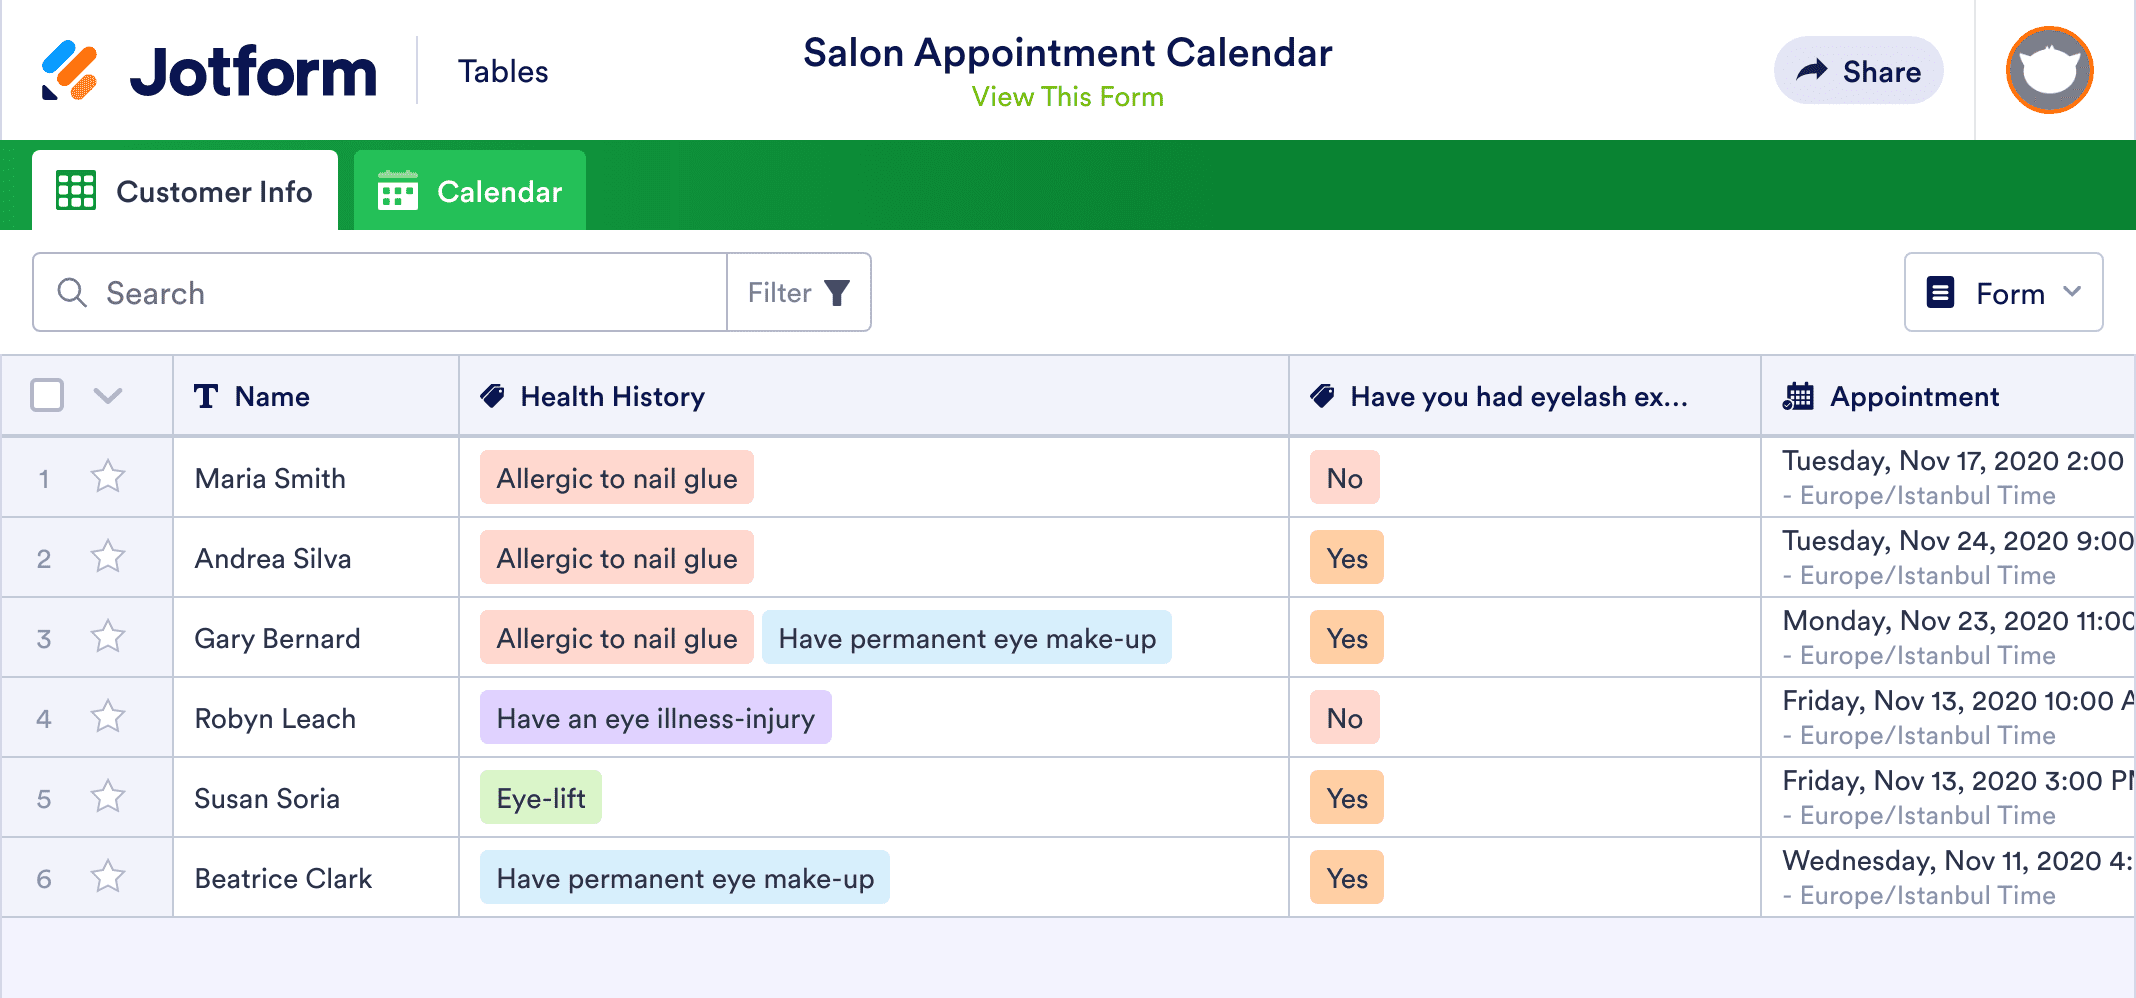 Salon Appointment Calendar